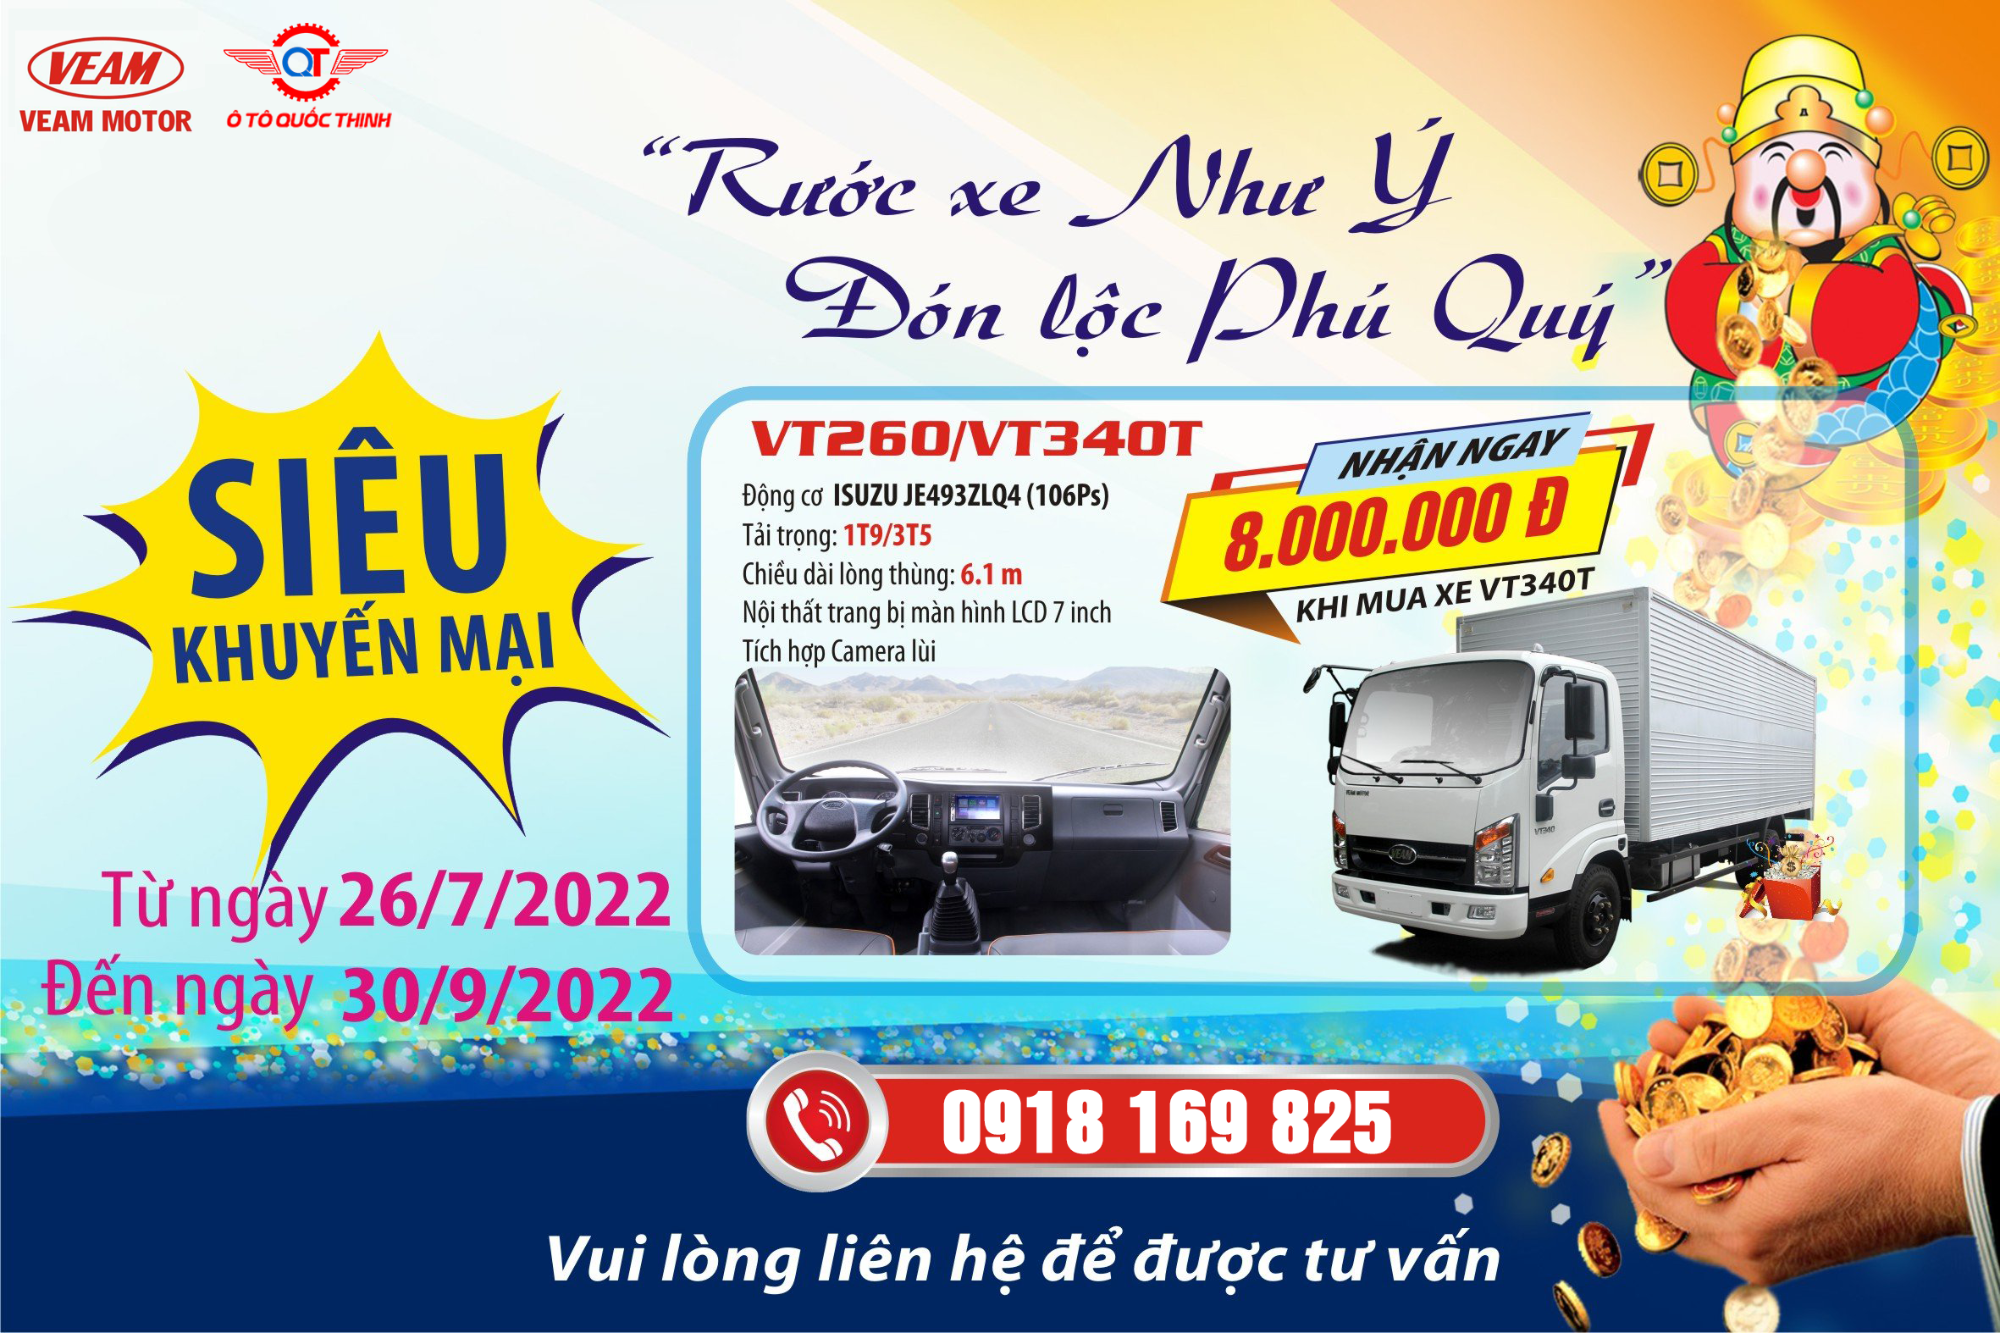 Khuyến mãi xe tải Veam VT260 VT 340